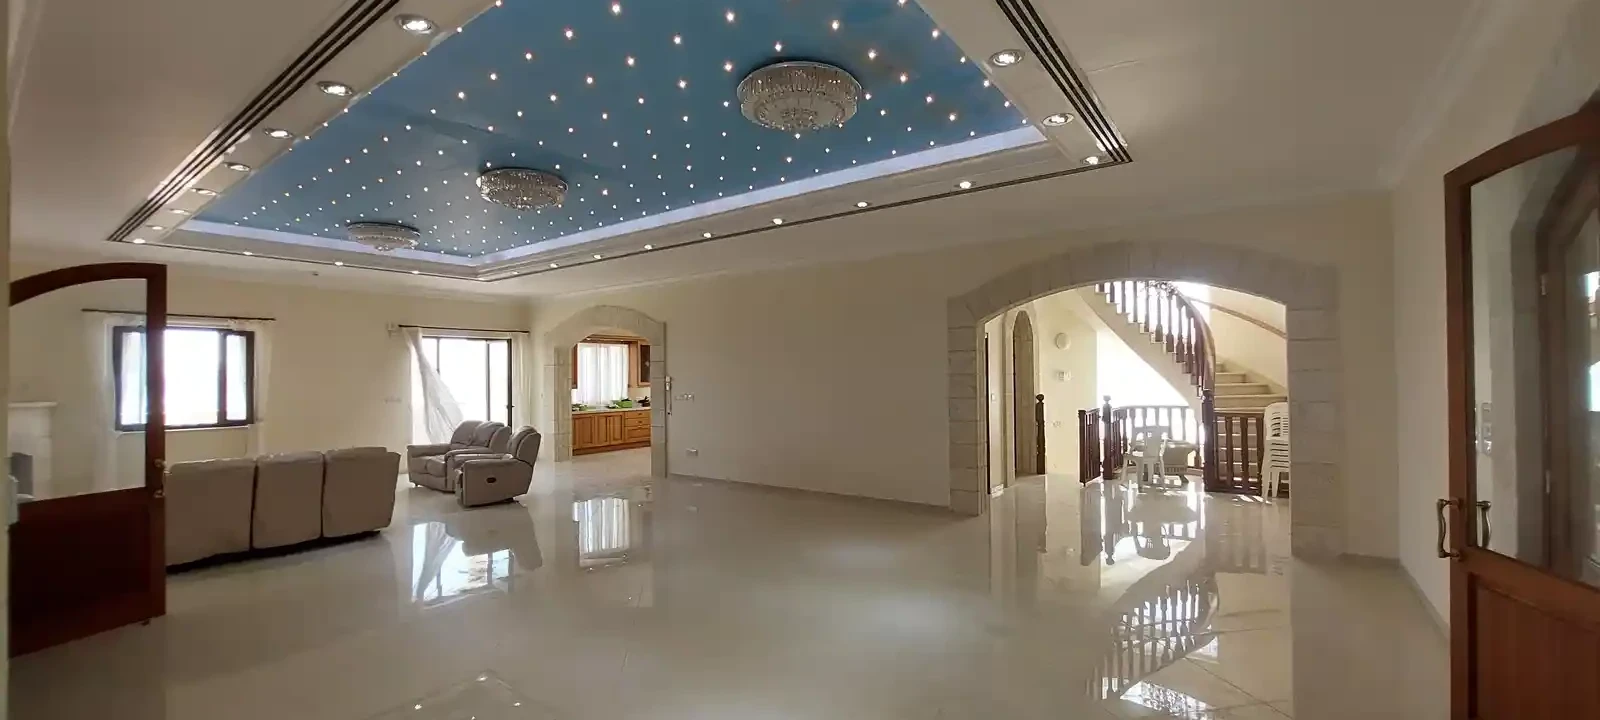 8-bedroom villa fоr sаle €2.200.000, image 1